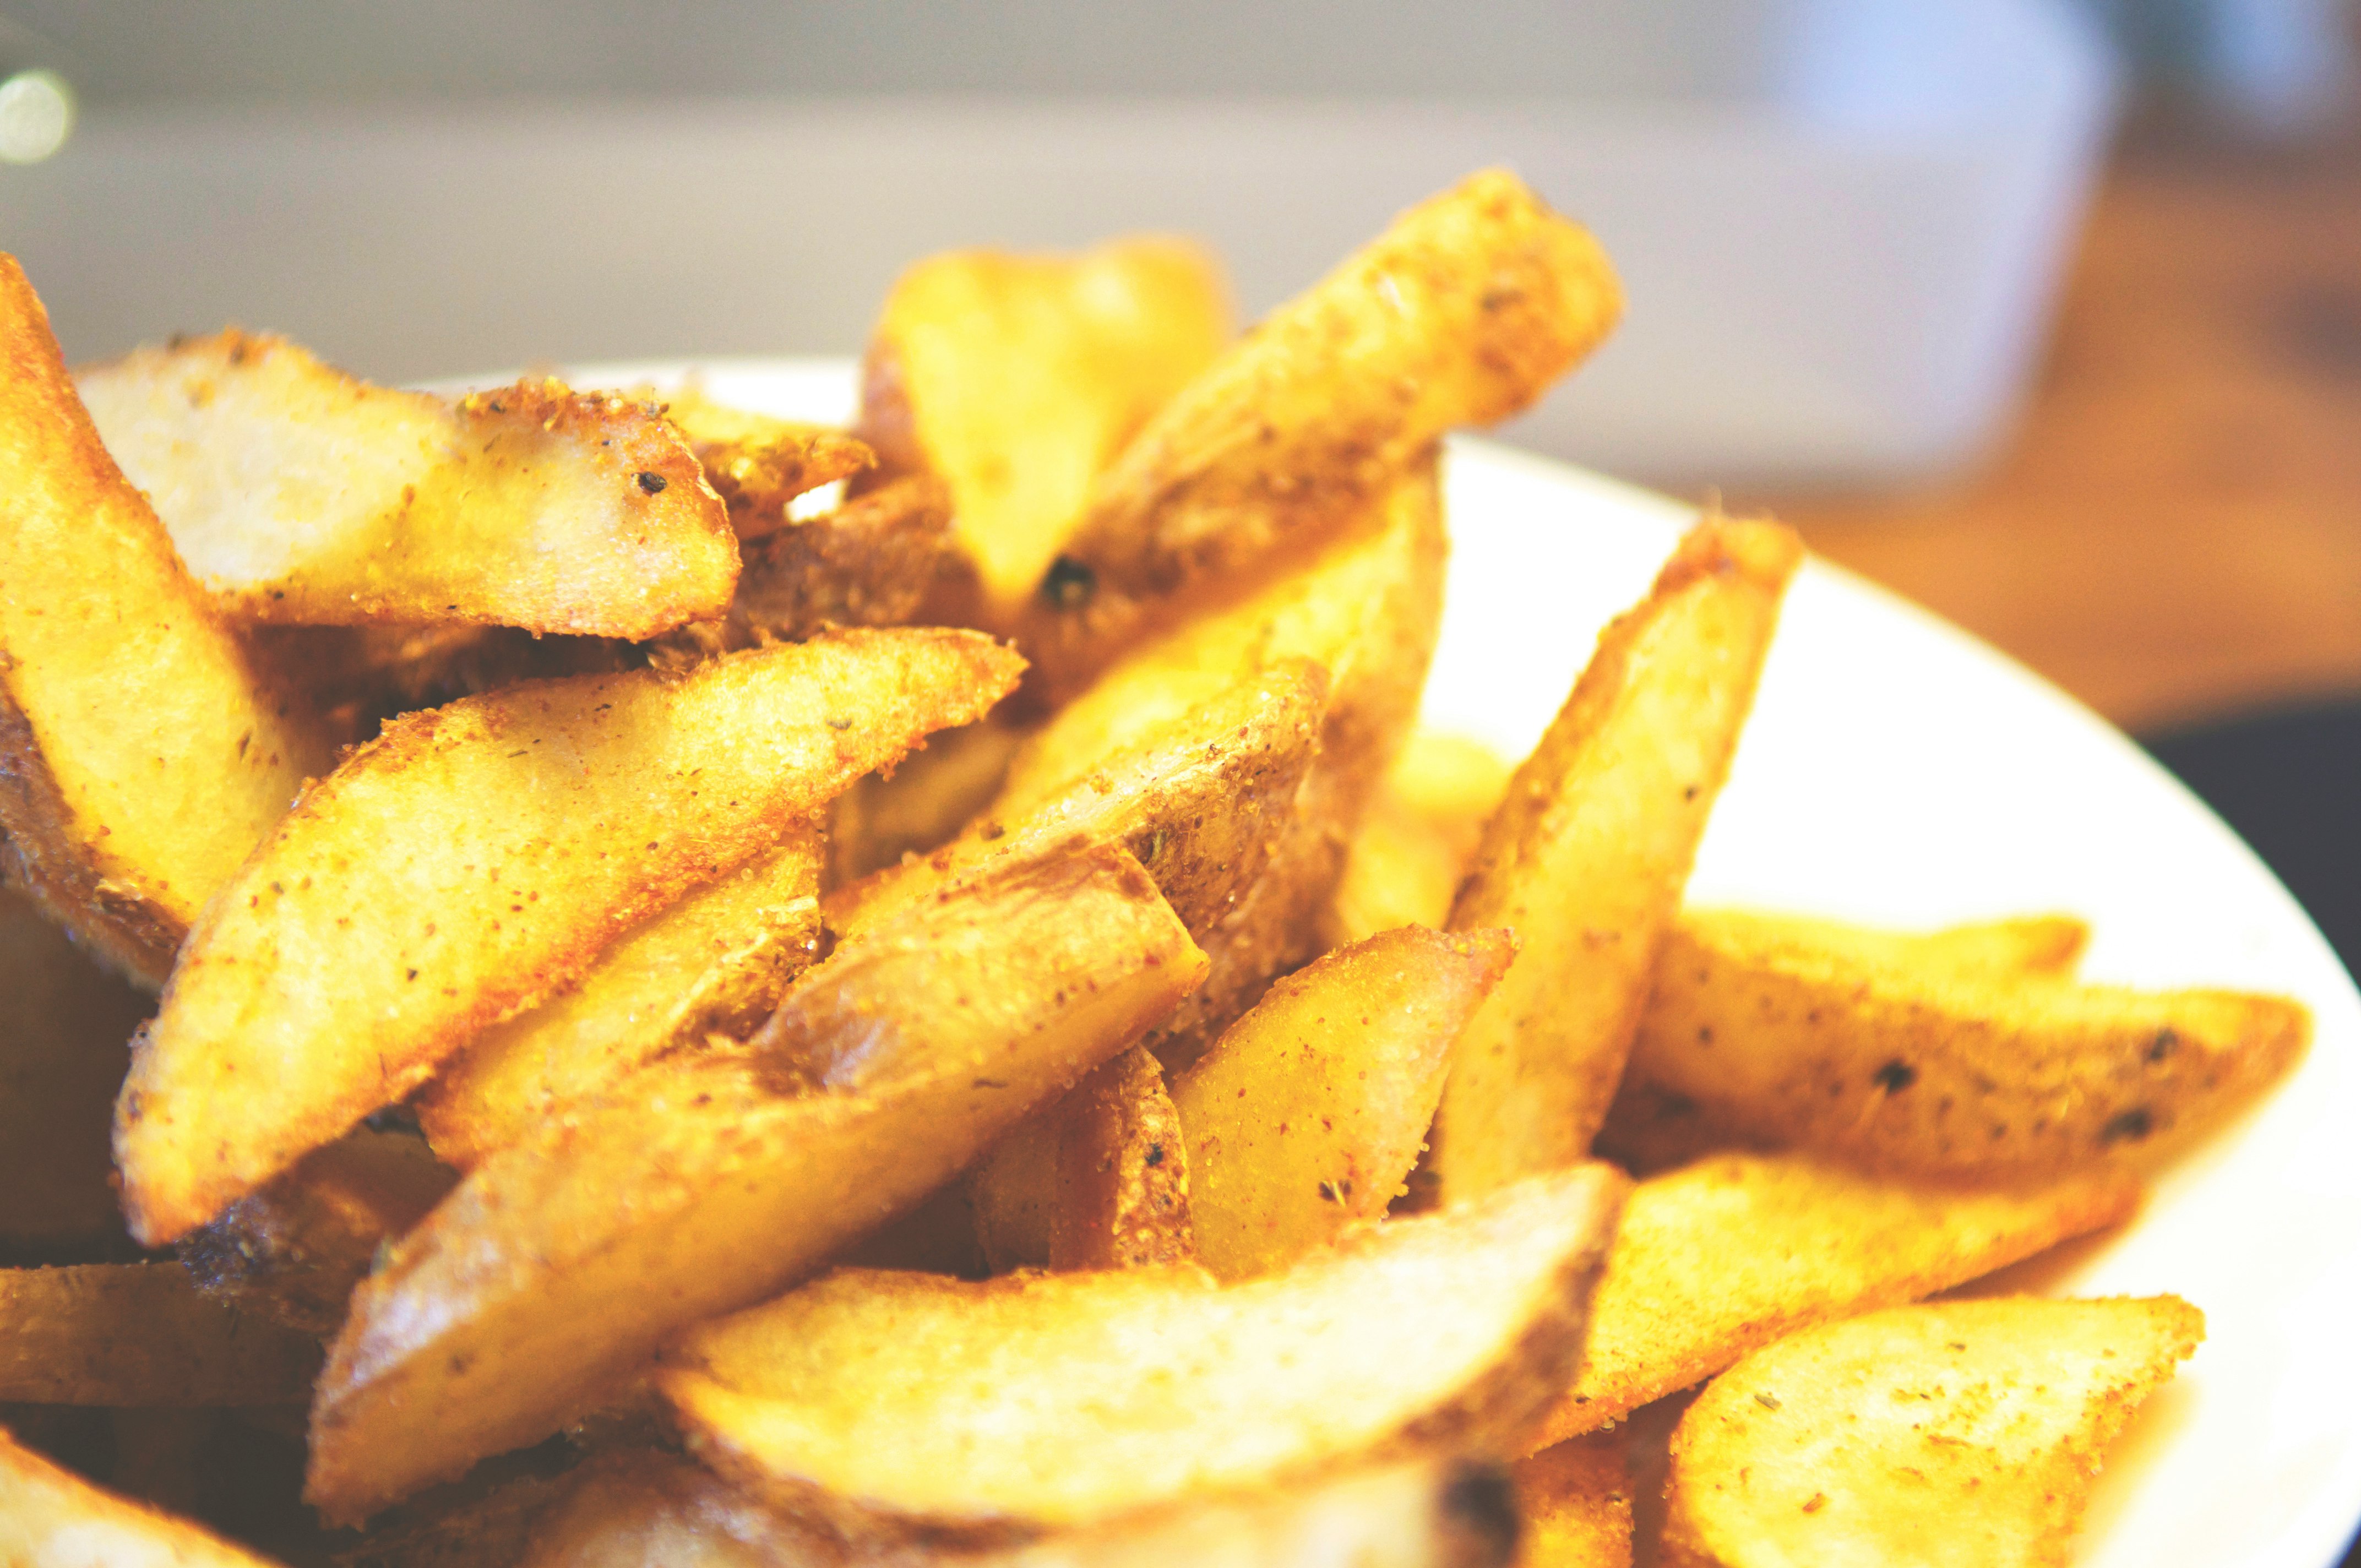 potato fries on white ceramic plate